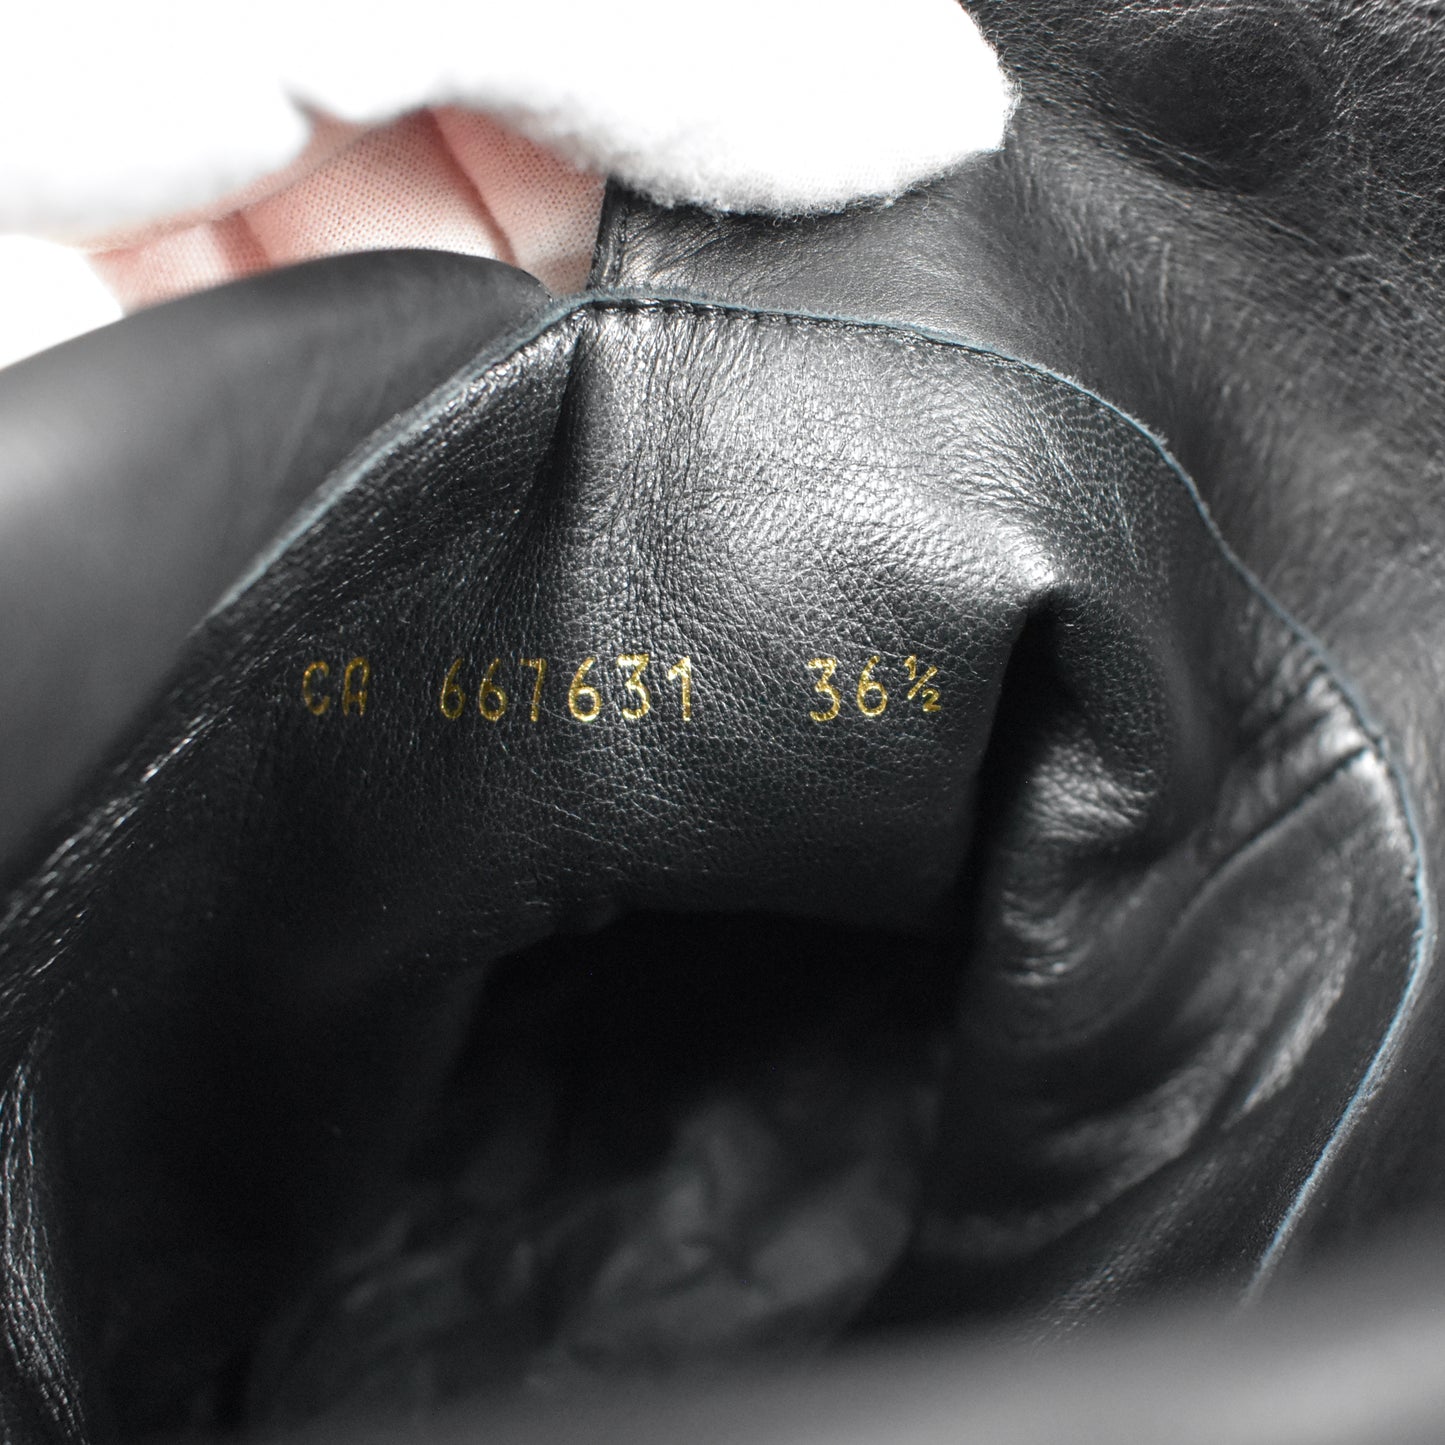 Saint Laurent - Black Calf Leather Jane 105 OTK Boots